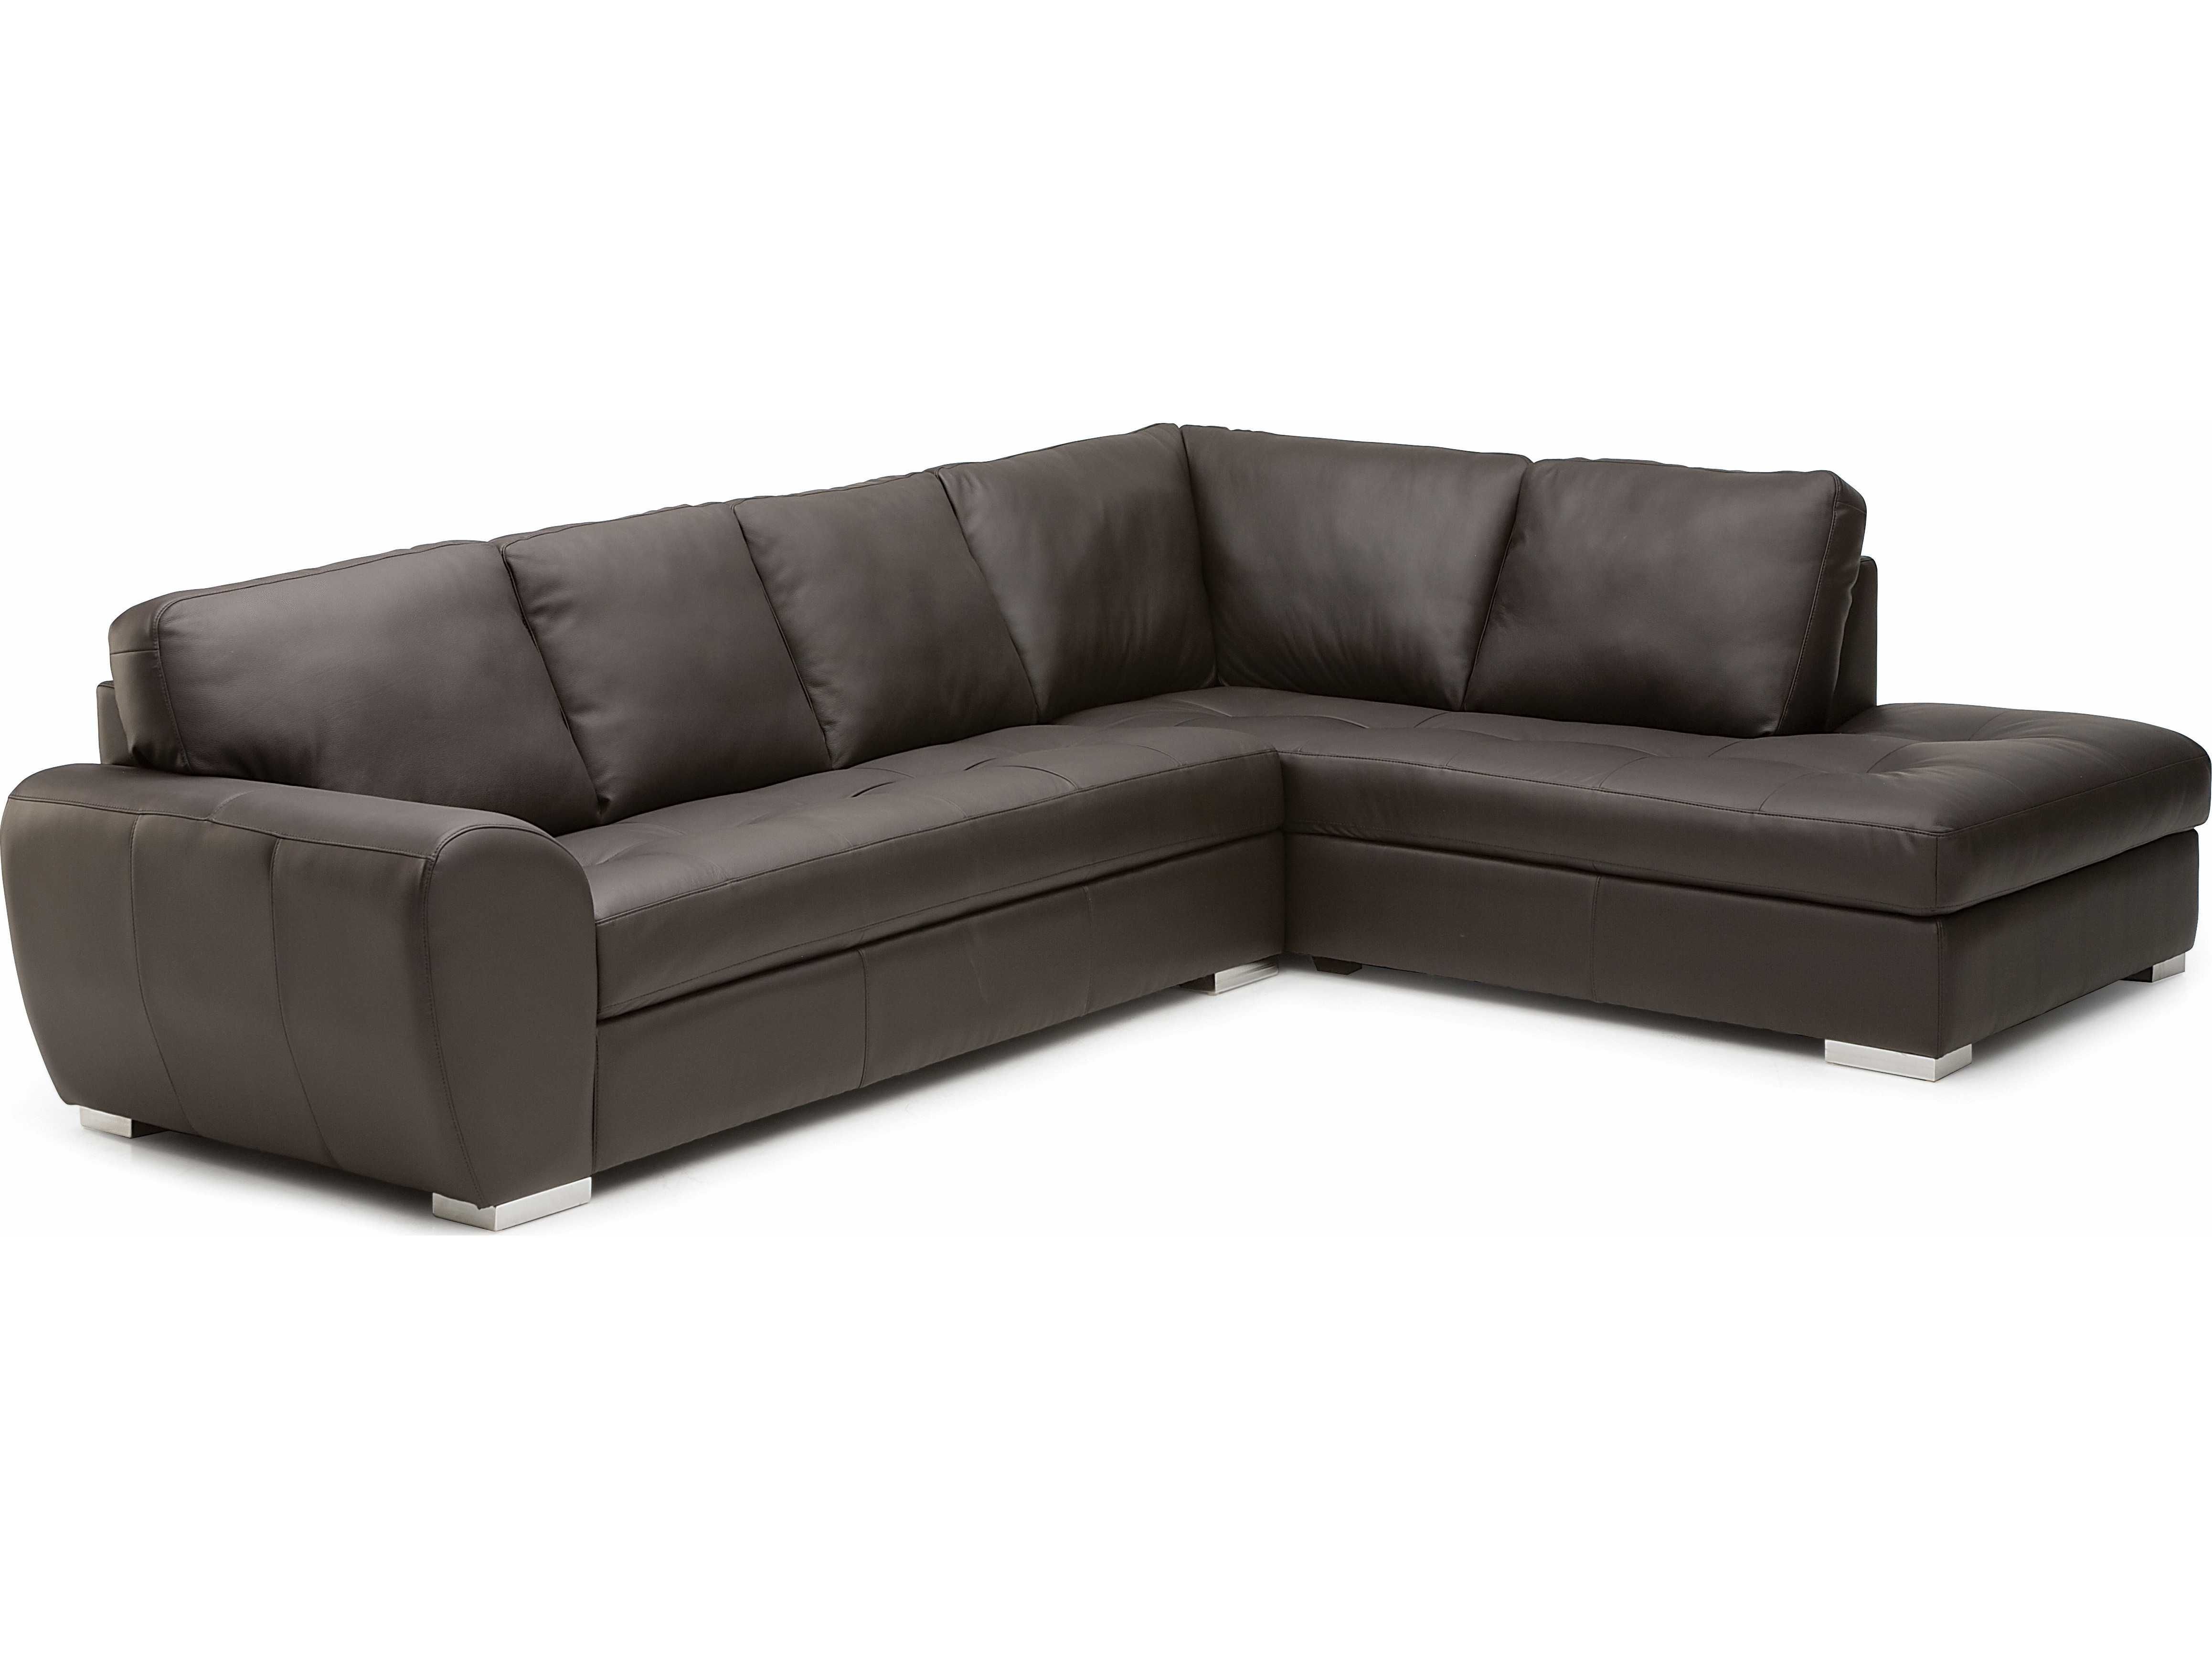 Palliser Kelowna Sectional Sofa | Pl77857sc1 With Kelowna Sectional Sofas (Photo 1 of 10)